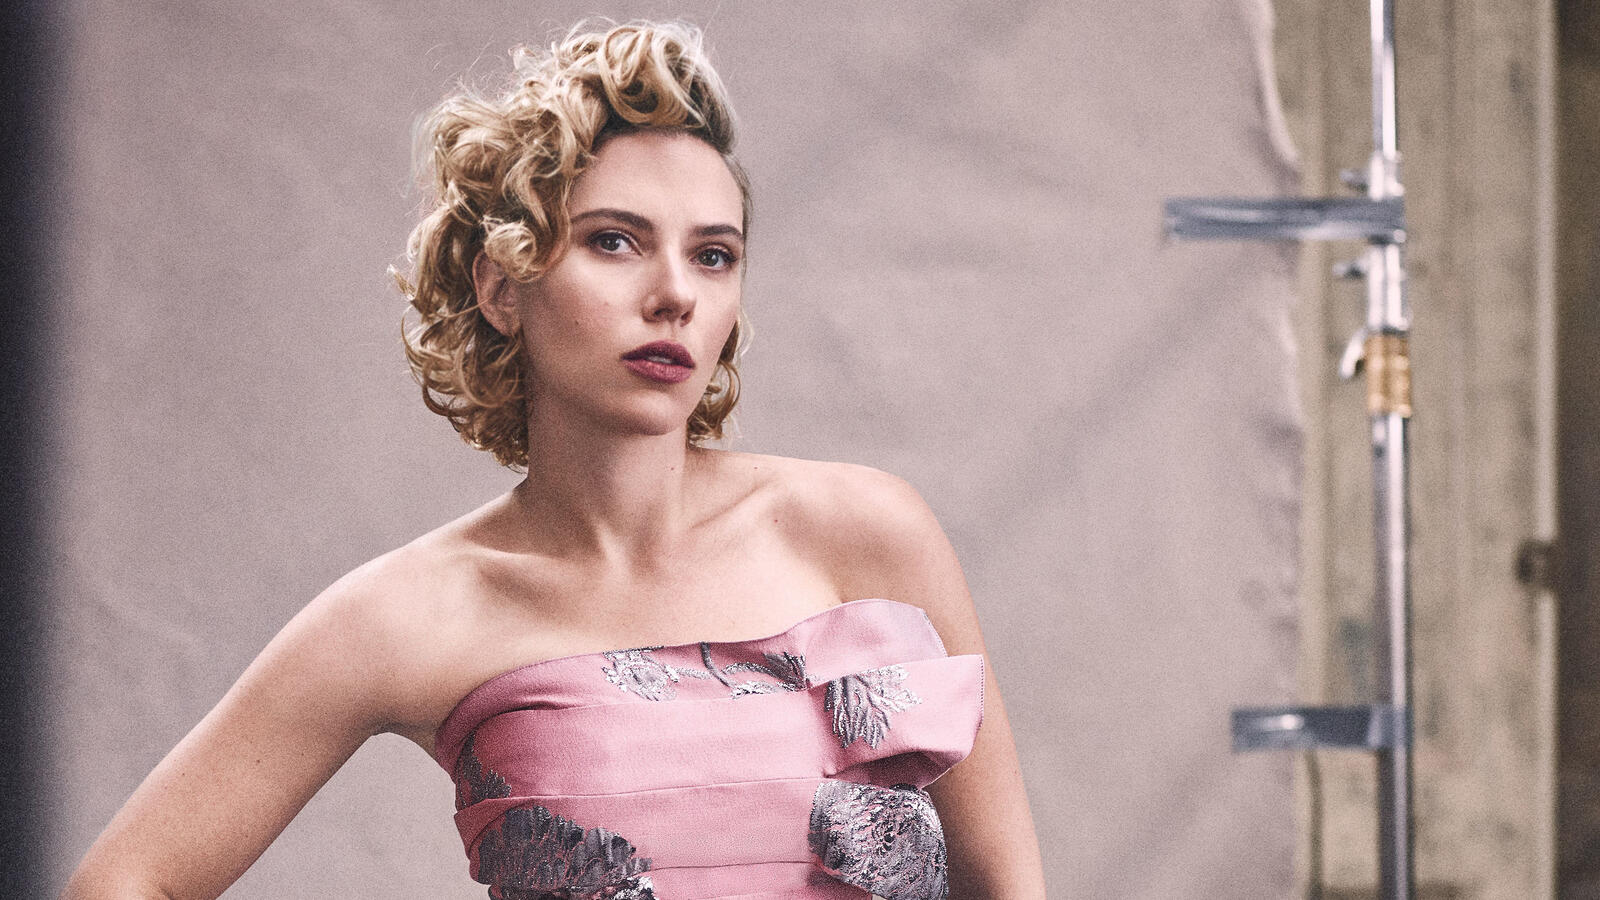 Wallpapers girls Scarlett Johansson photoshoot on the desktop